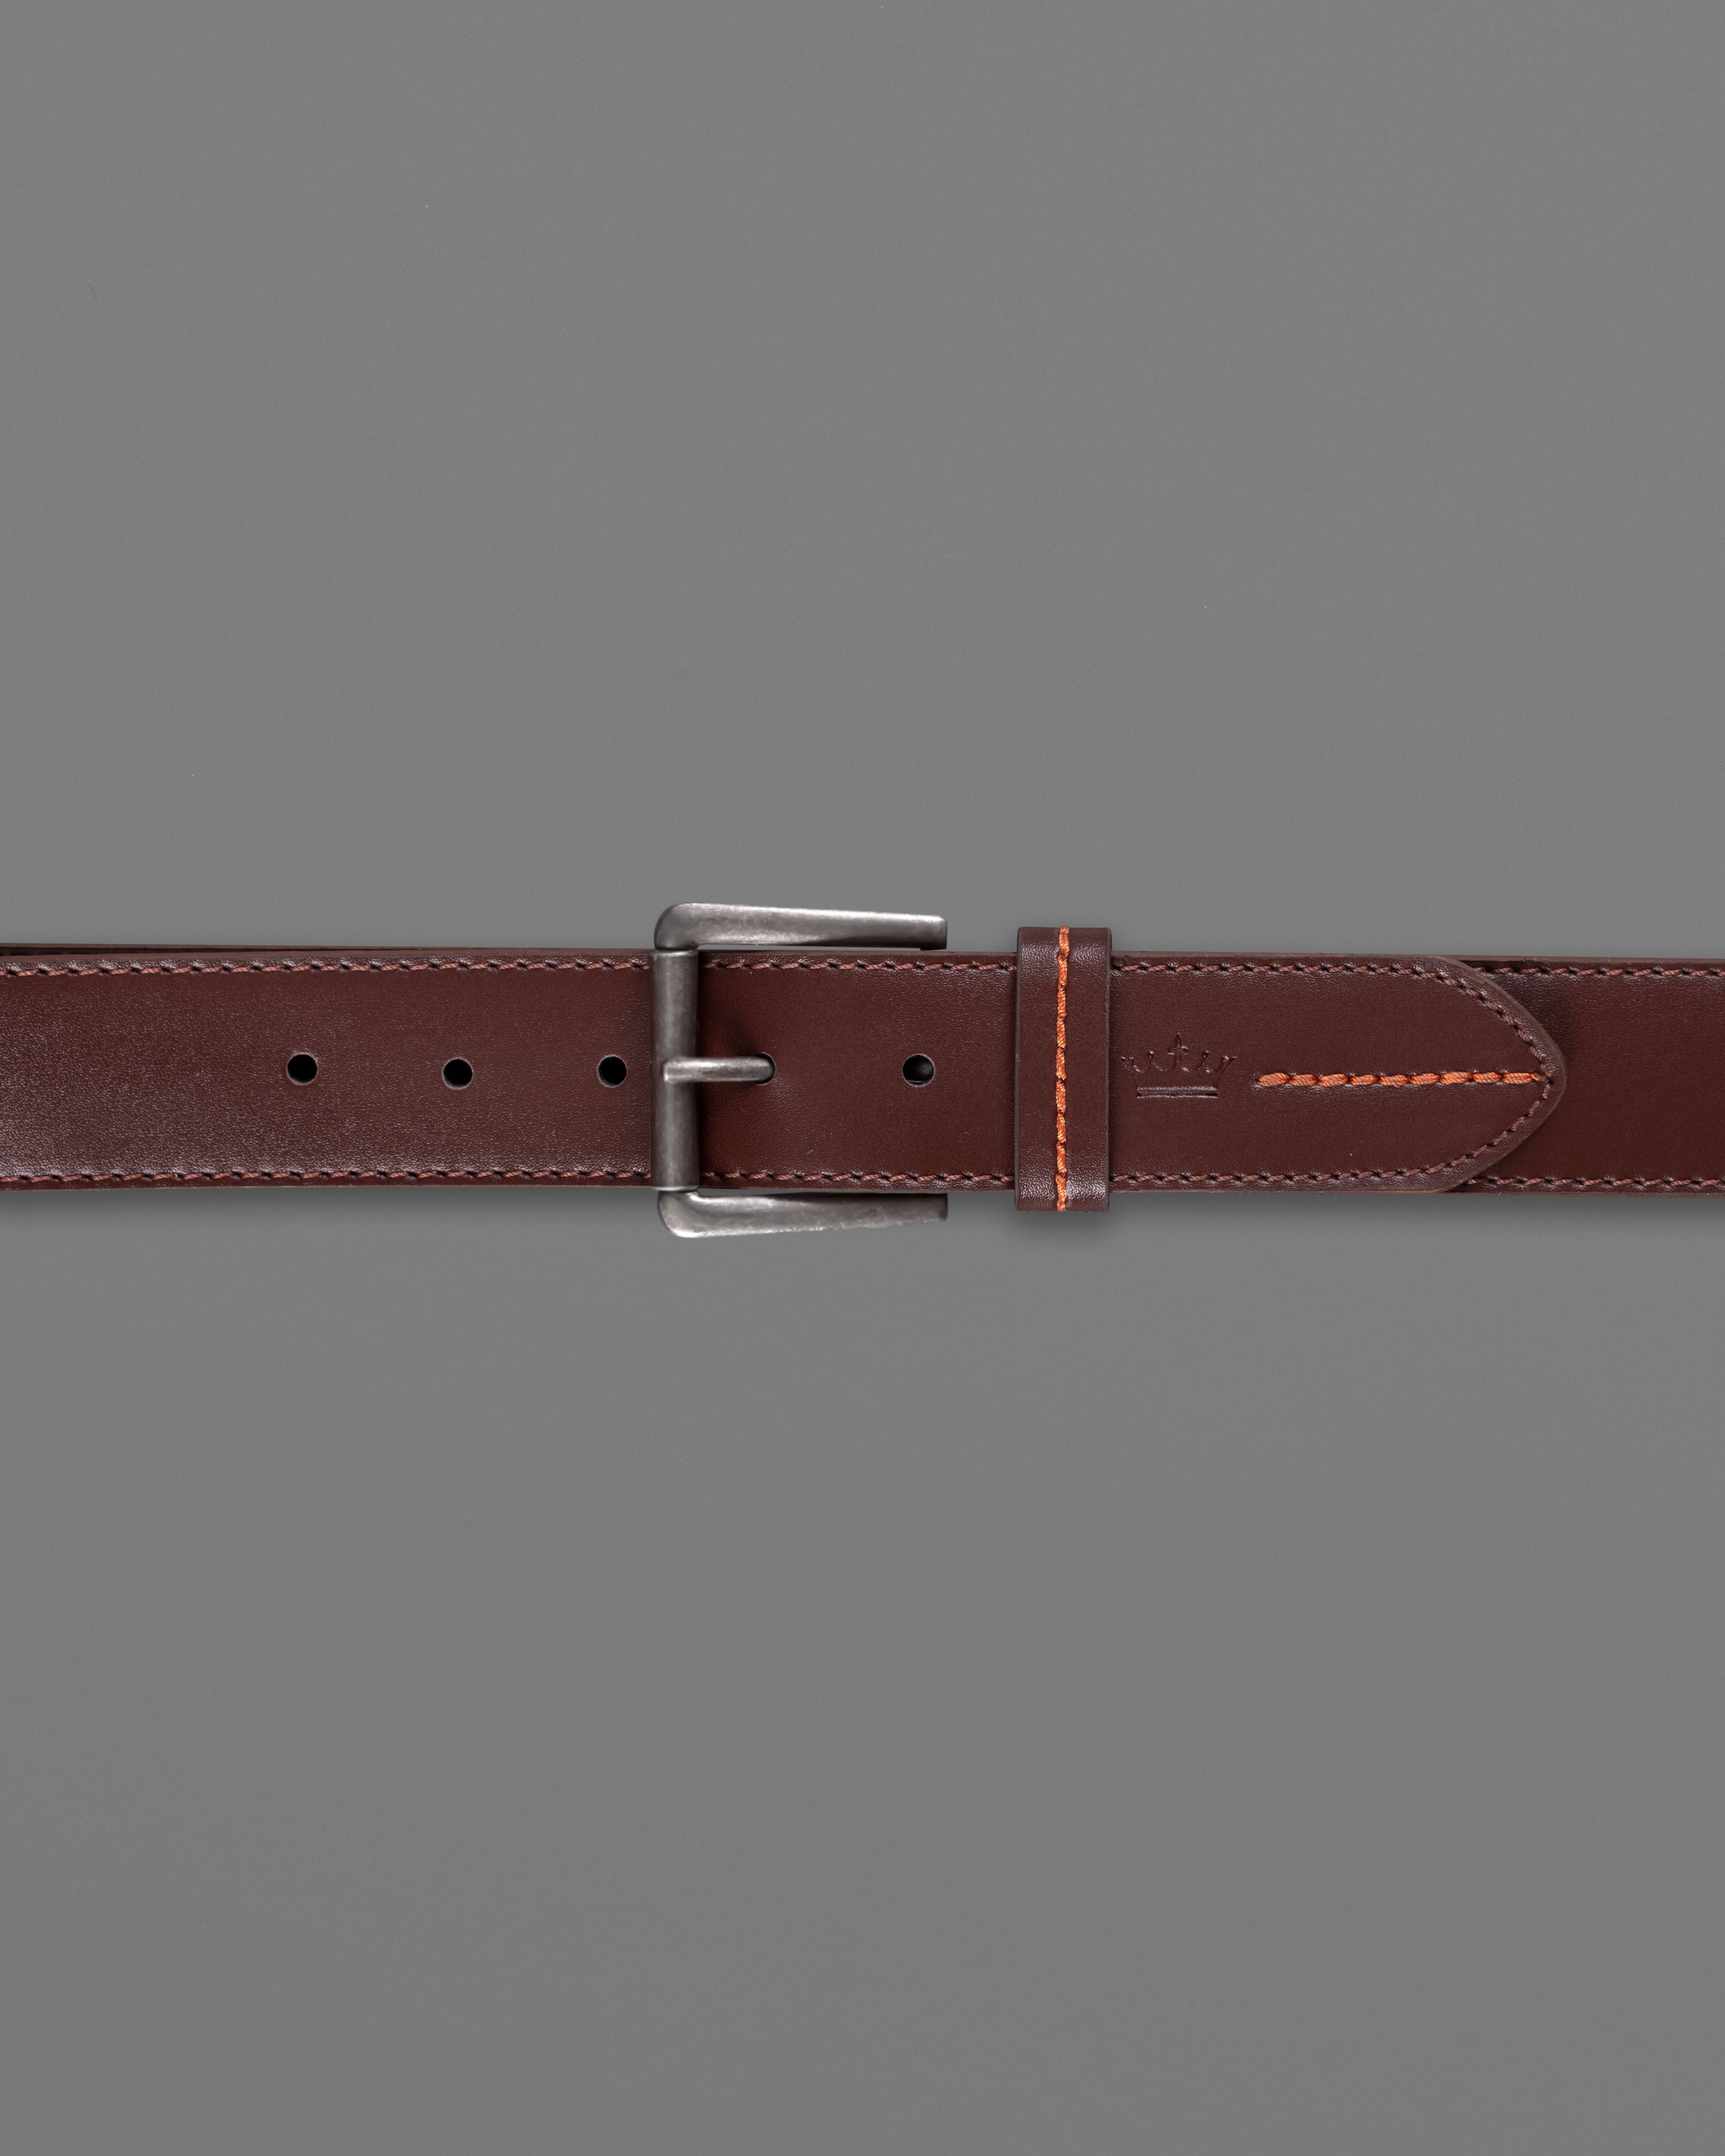 Tan Brown with Metallic Buckle Leather Free Lightweight Handcrafted Belt BT107-28, BT107-30, BT107-32, BT107-34, BT107-36, BT107-38